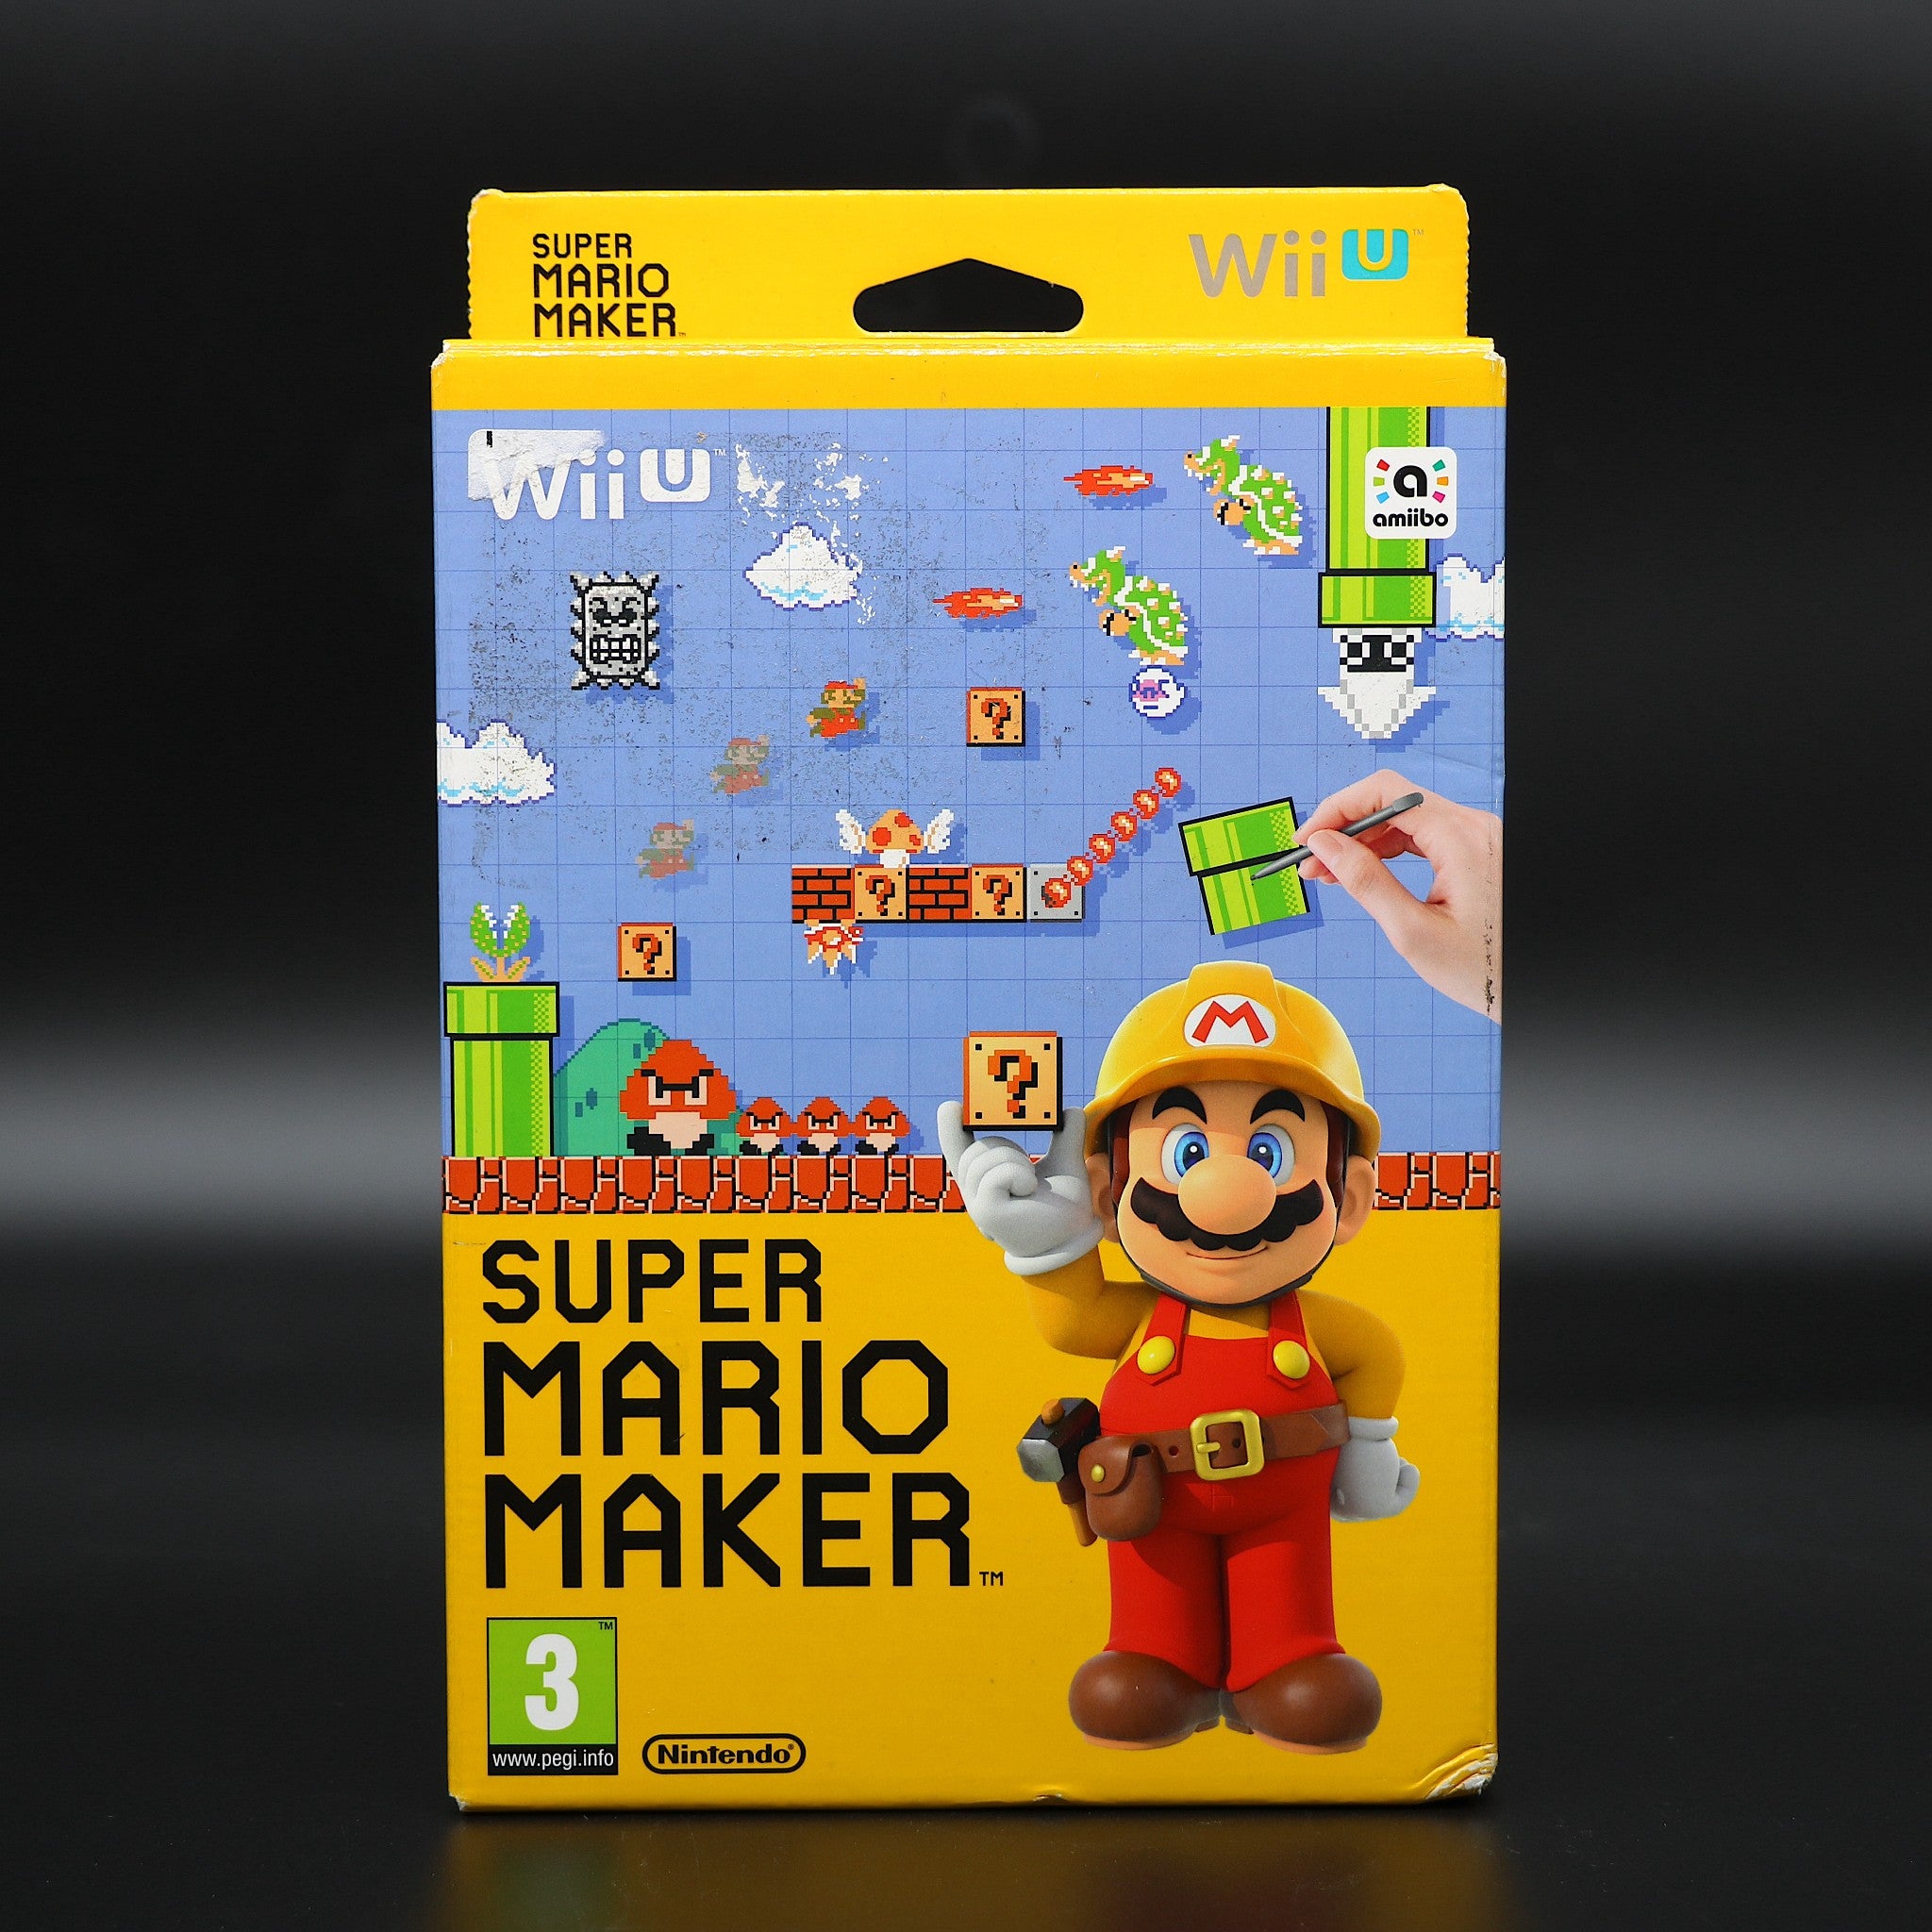 Super Mario Maker | Includes Hardback Art Book | Nintendo Wii U Game | New